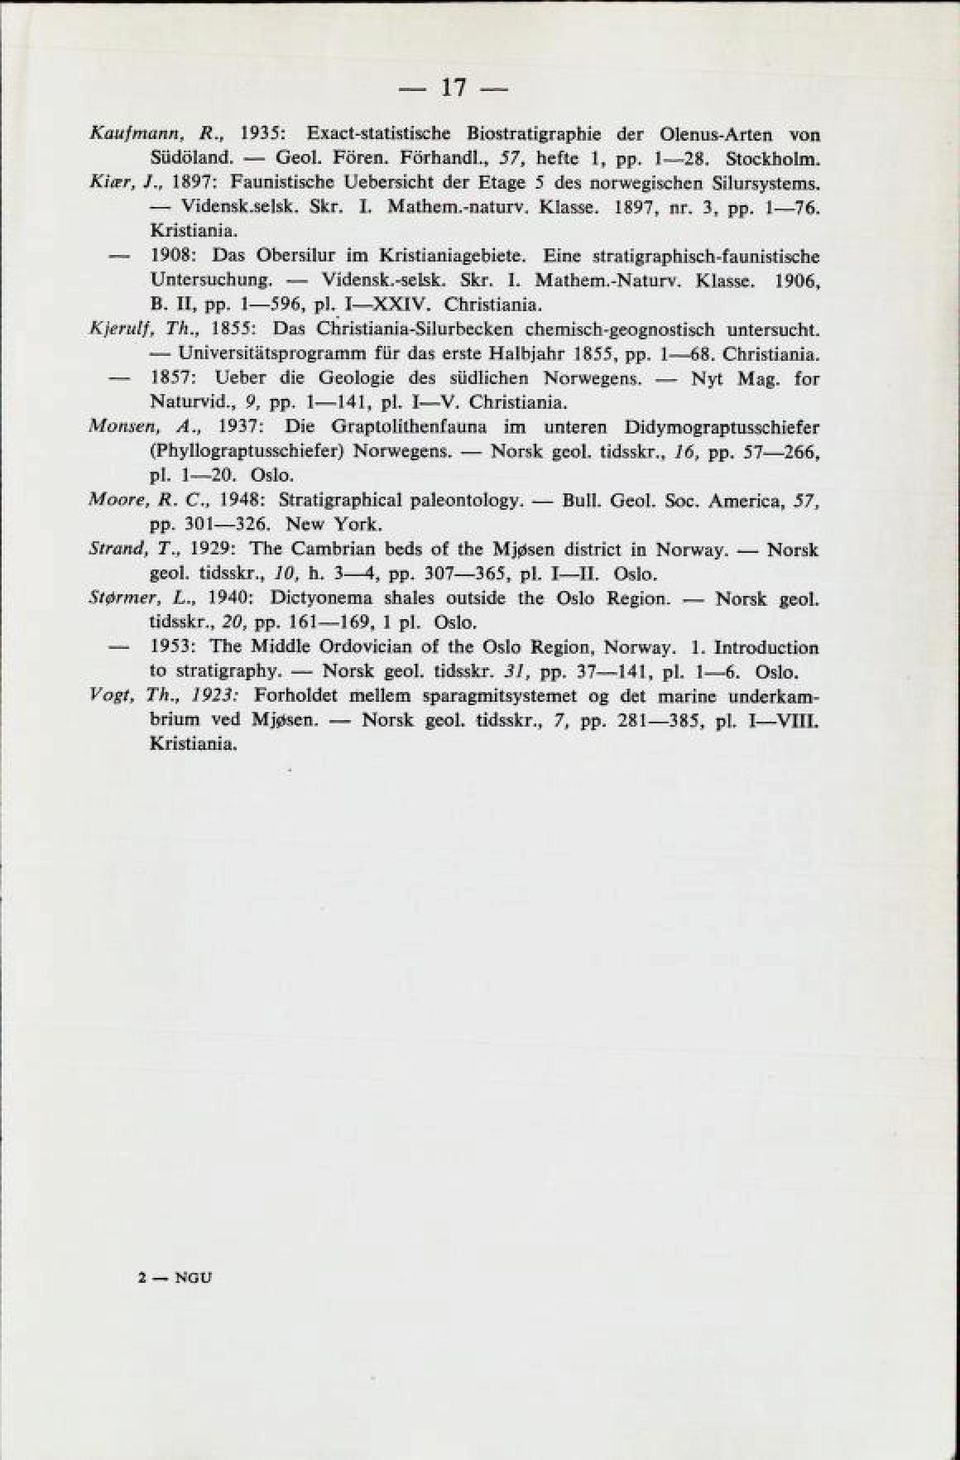 Eine stratigraphisch-faunistische Untersuchung. Vidensk.-selsk. Skr. I. Mathem.-Naturv. Klasse. 1906, B. 11, pp. 1 596, pl. XXIV. Christiania. Kjerulf, Th.